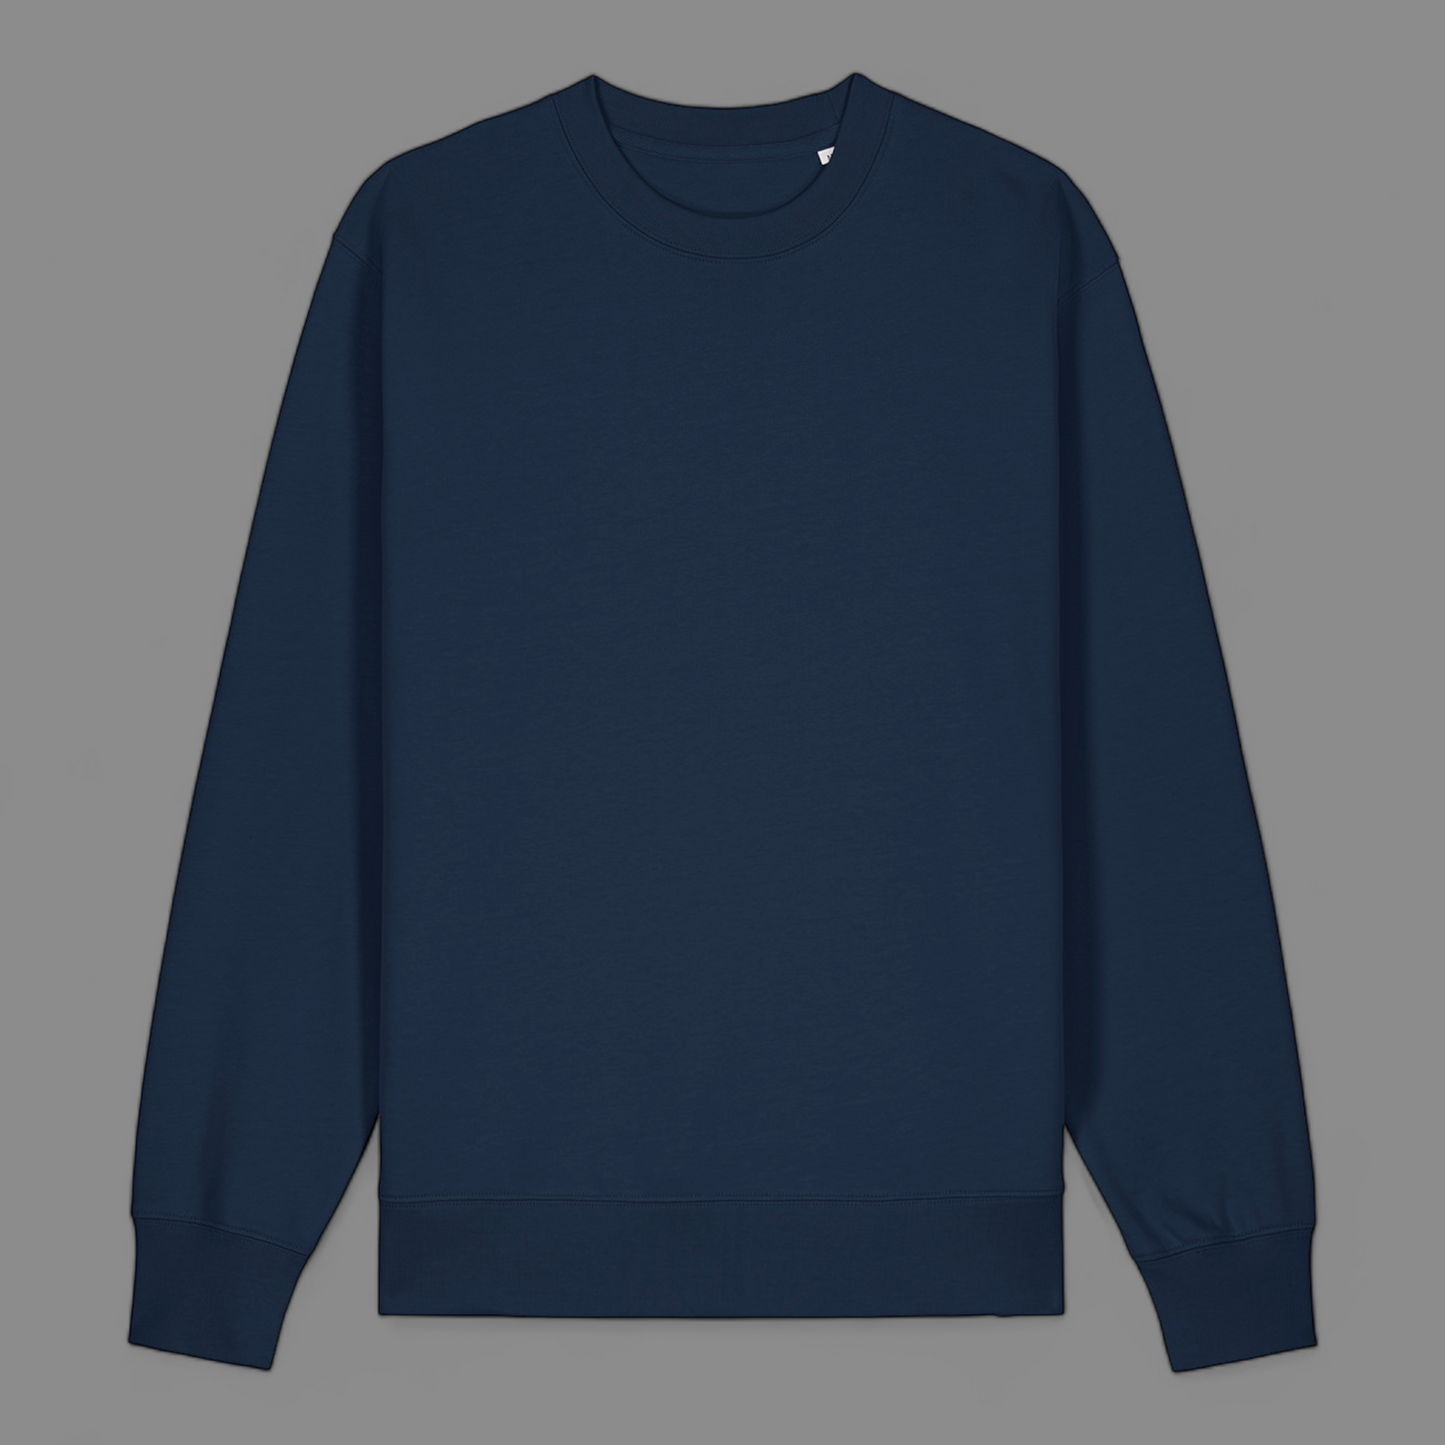 Adult Sweatshirt - Create Your Own - Dia Duit